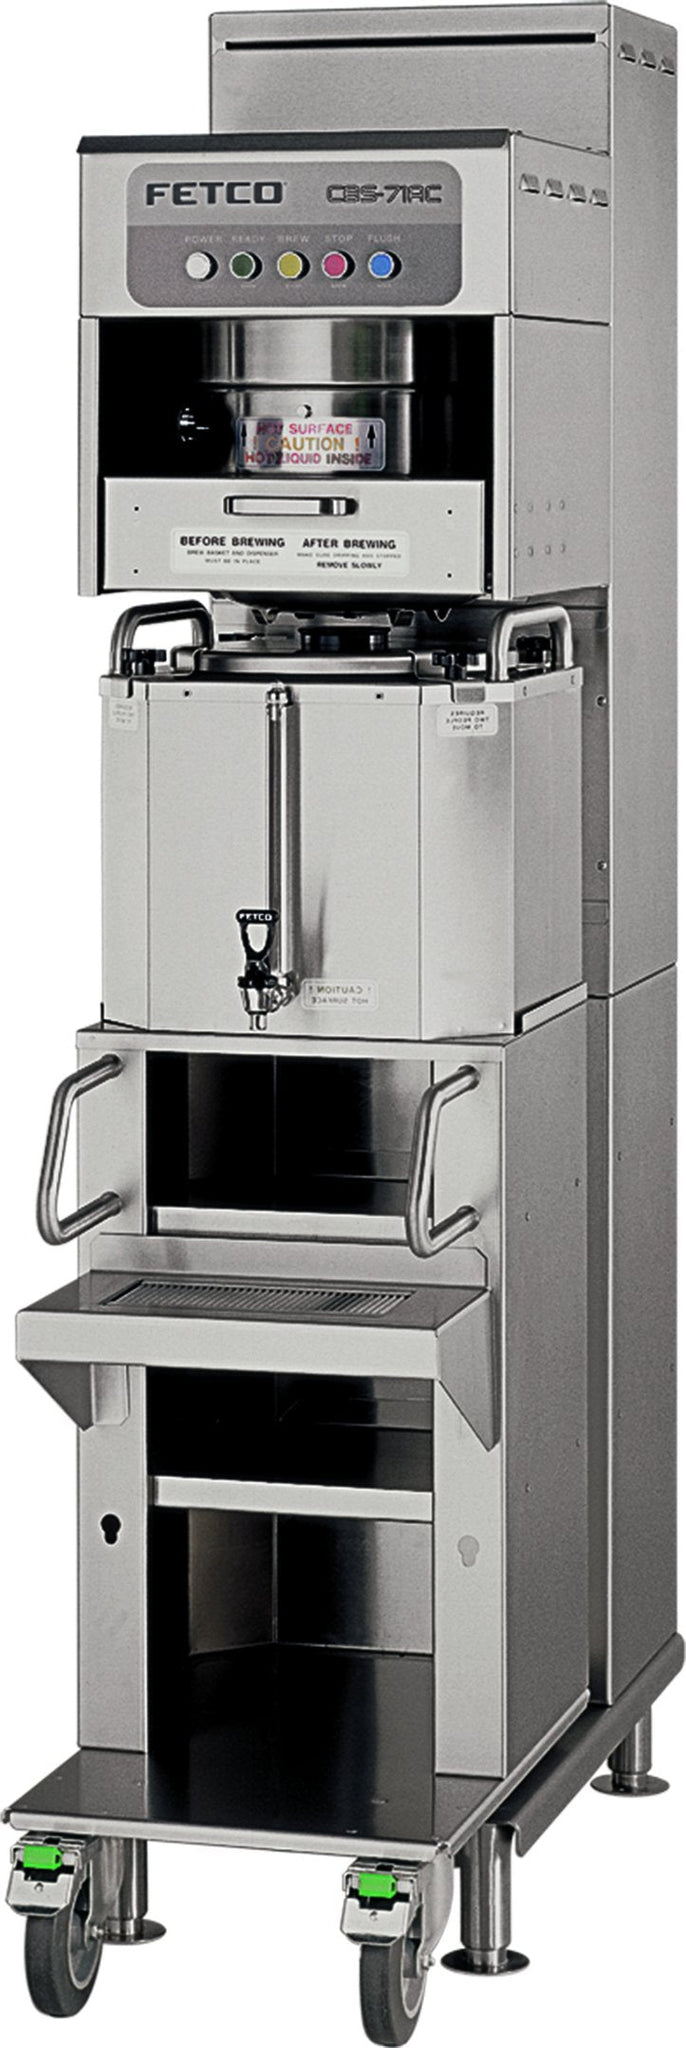 Fetco - High Volume Single Station Coffee Brewing System 3 x 5 kW (120/208-240V) - CBS-71AC